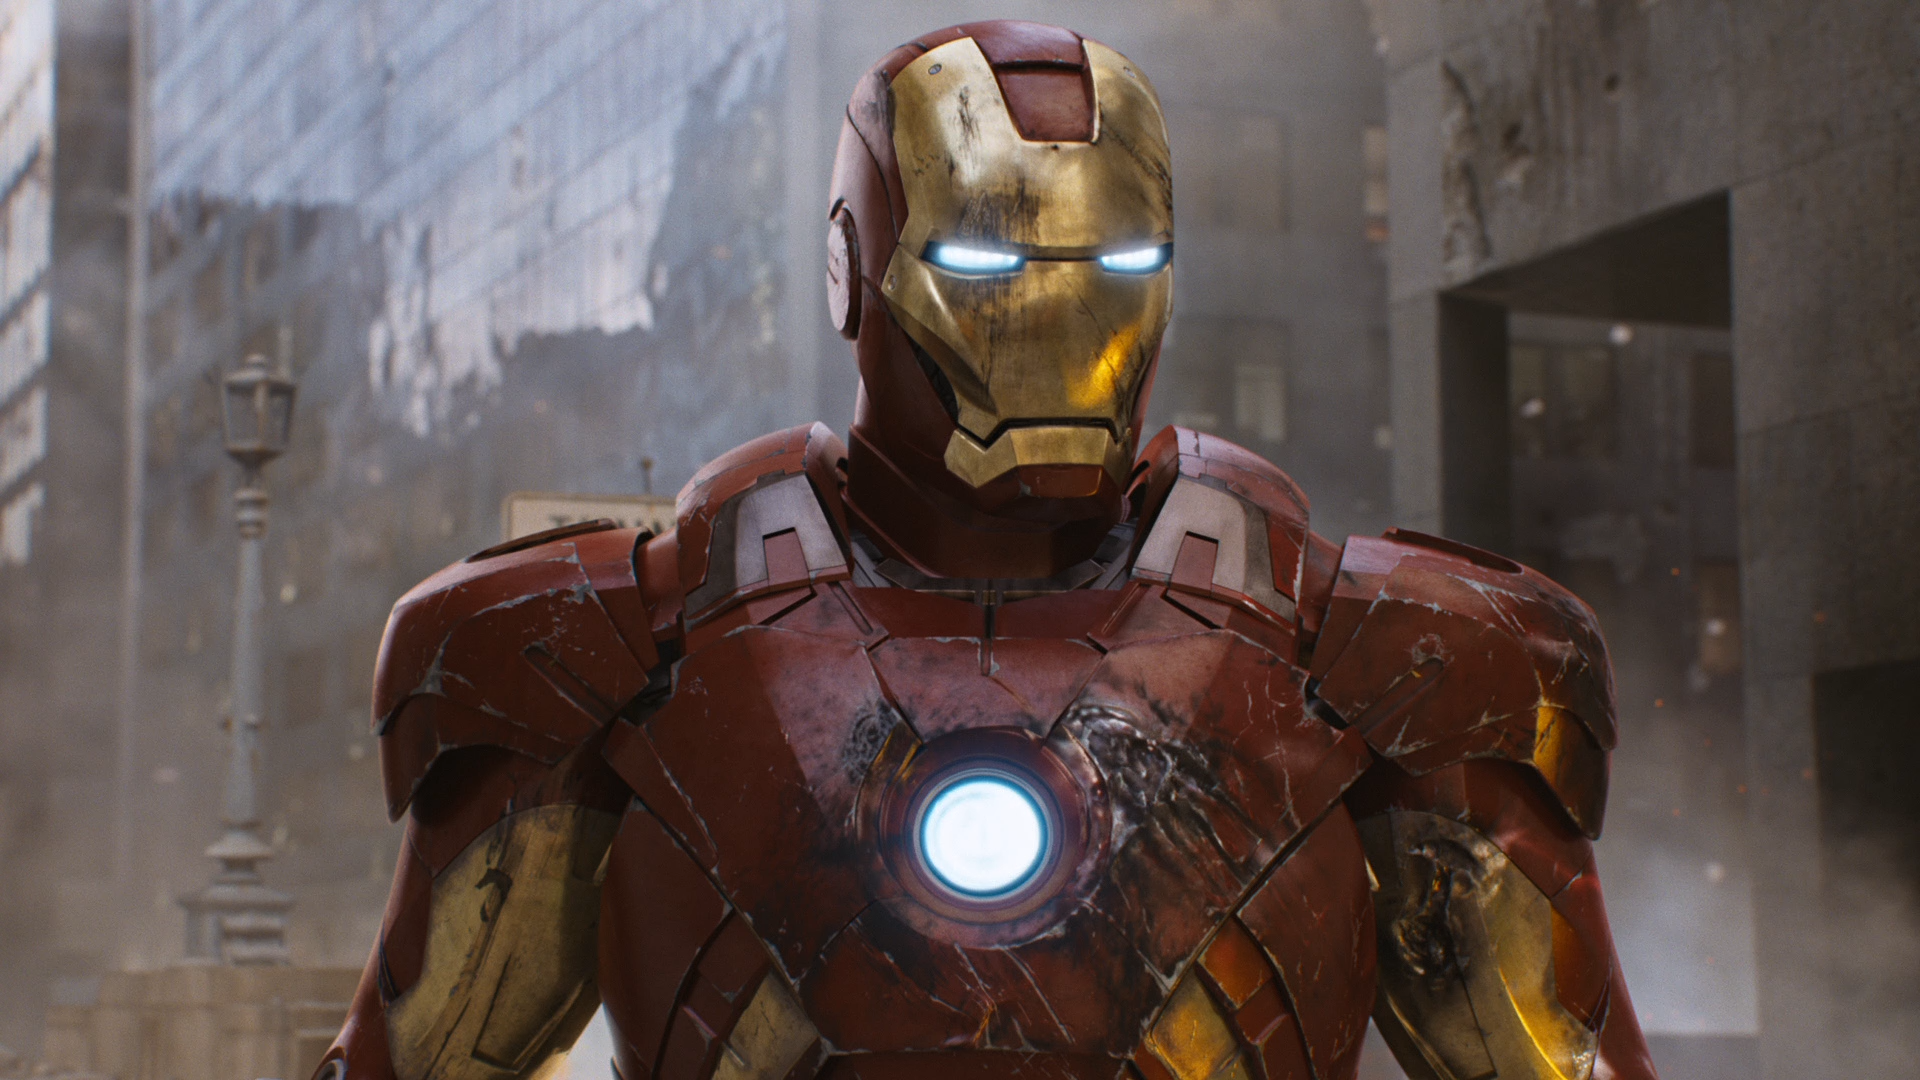 General 1920x1080 movies Iron Man Marvel Cinematic Universe film stills